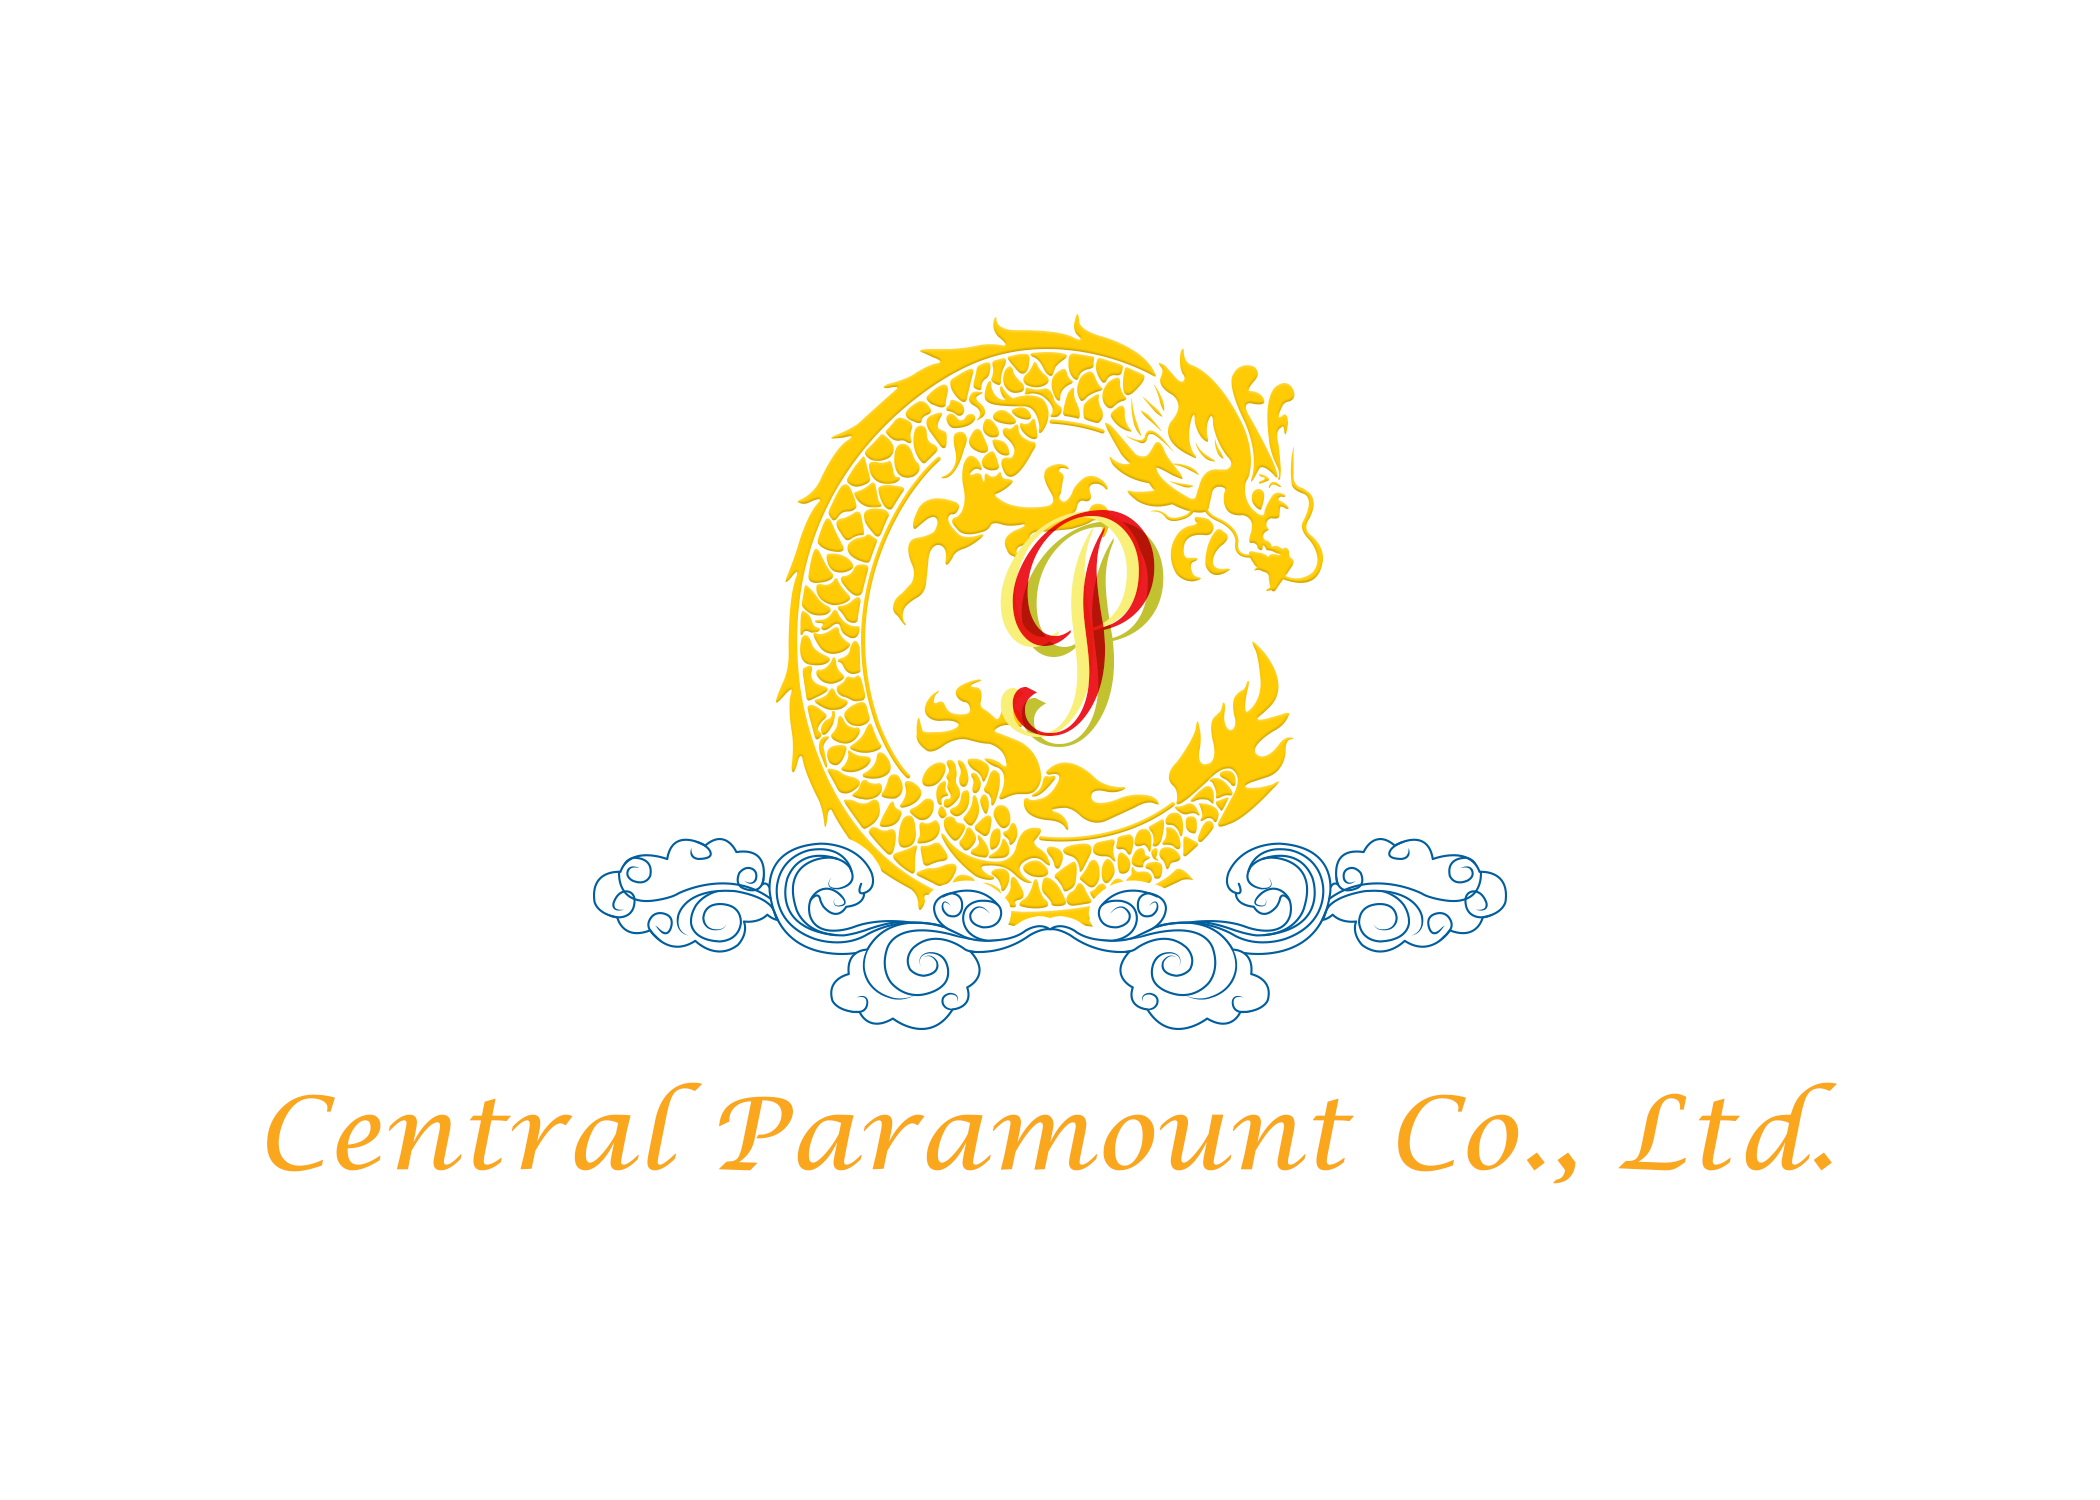 Central Paramount Co., Ltd